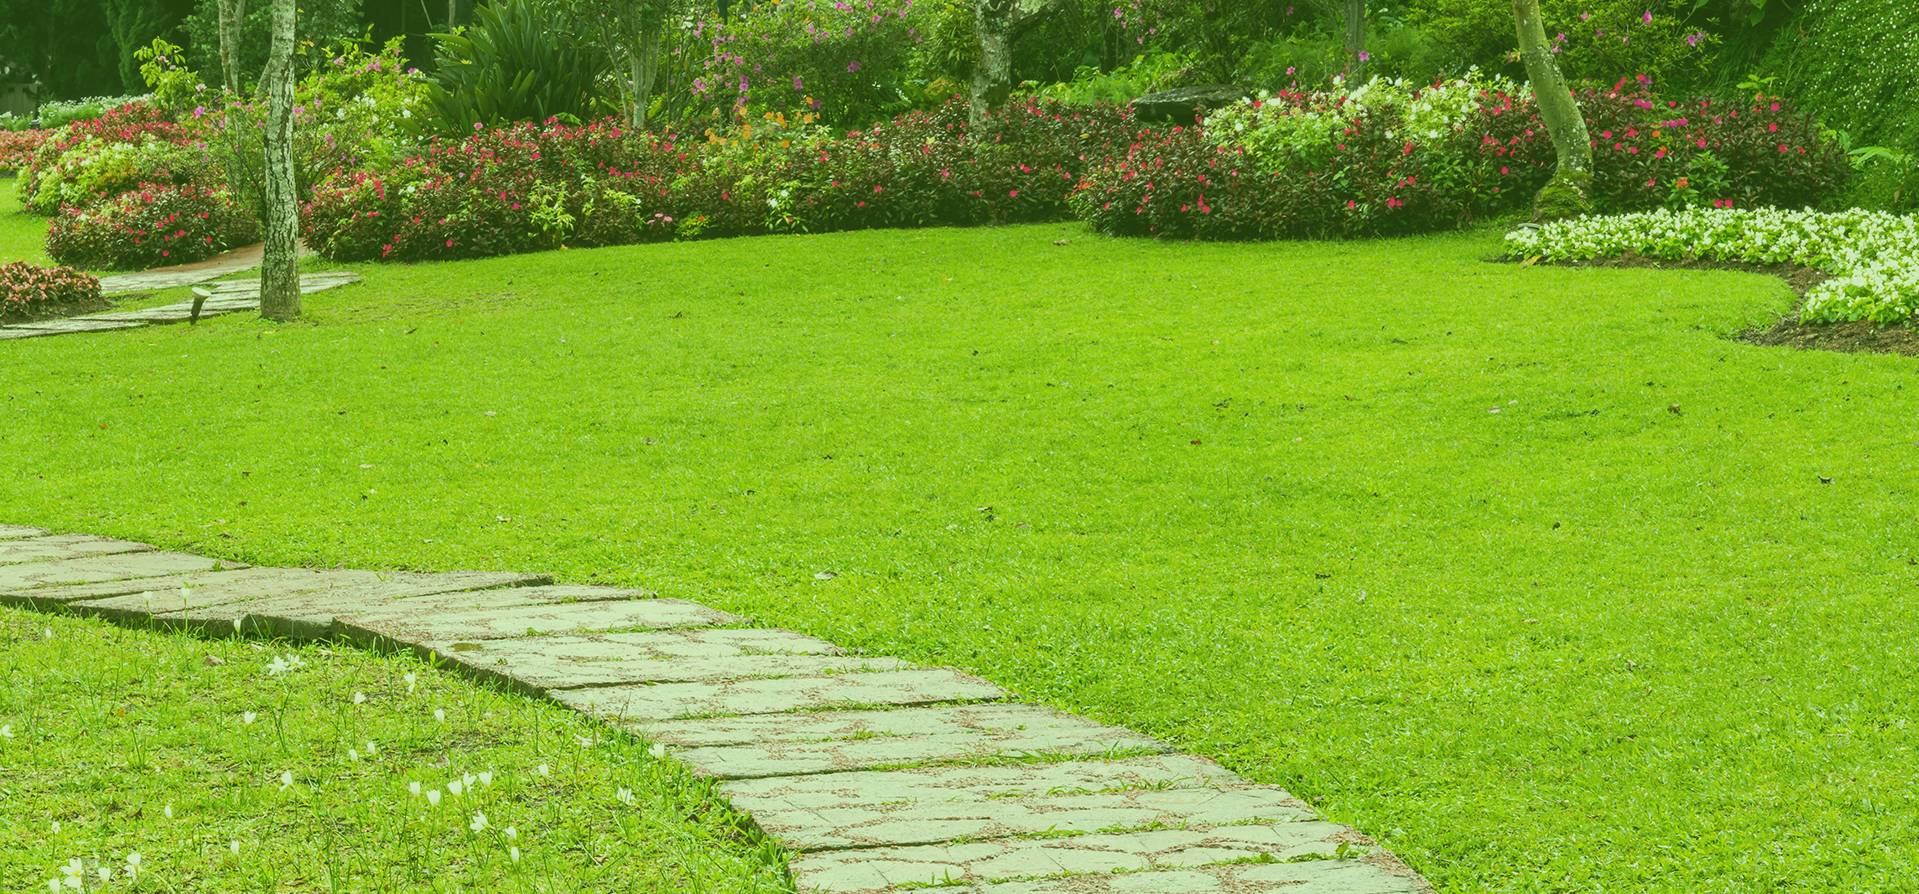 Green grass field with stone walkway